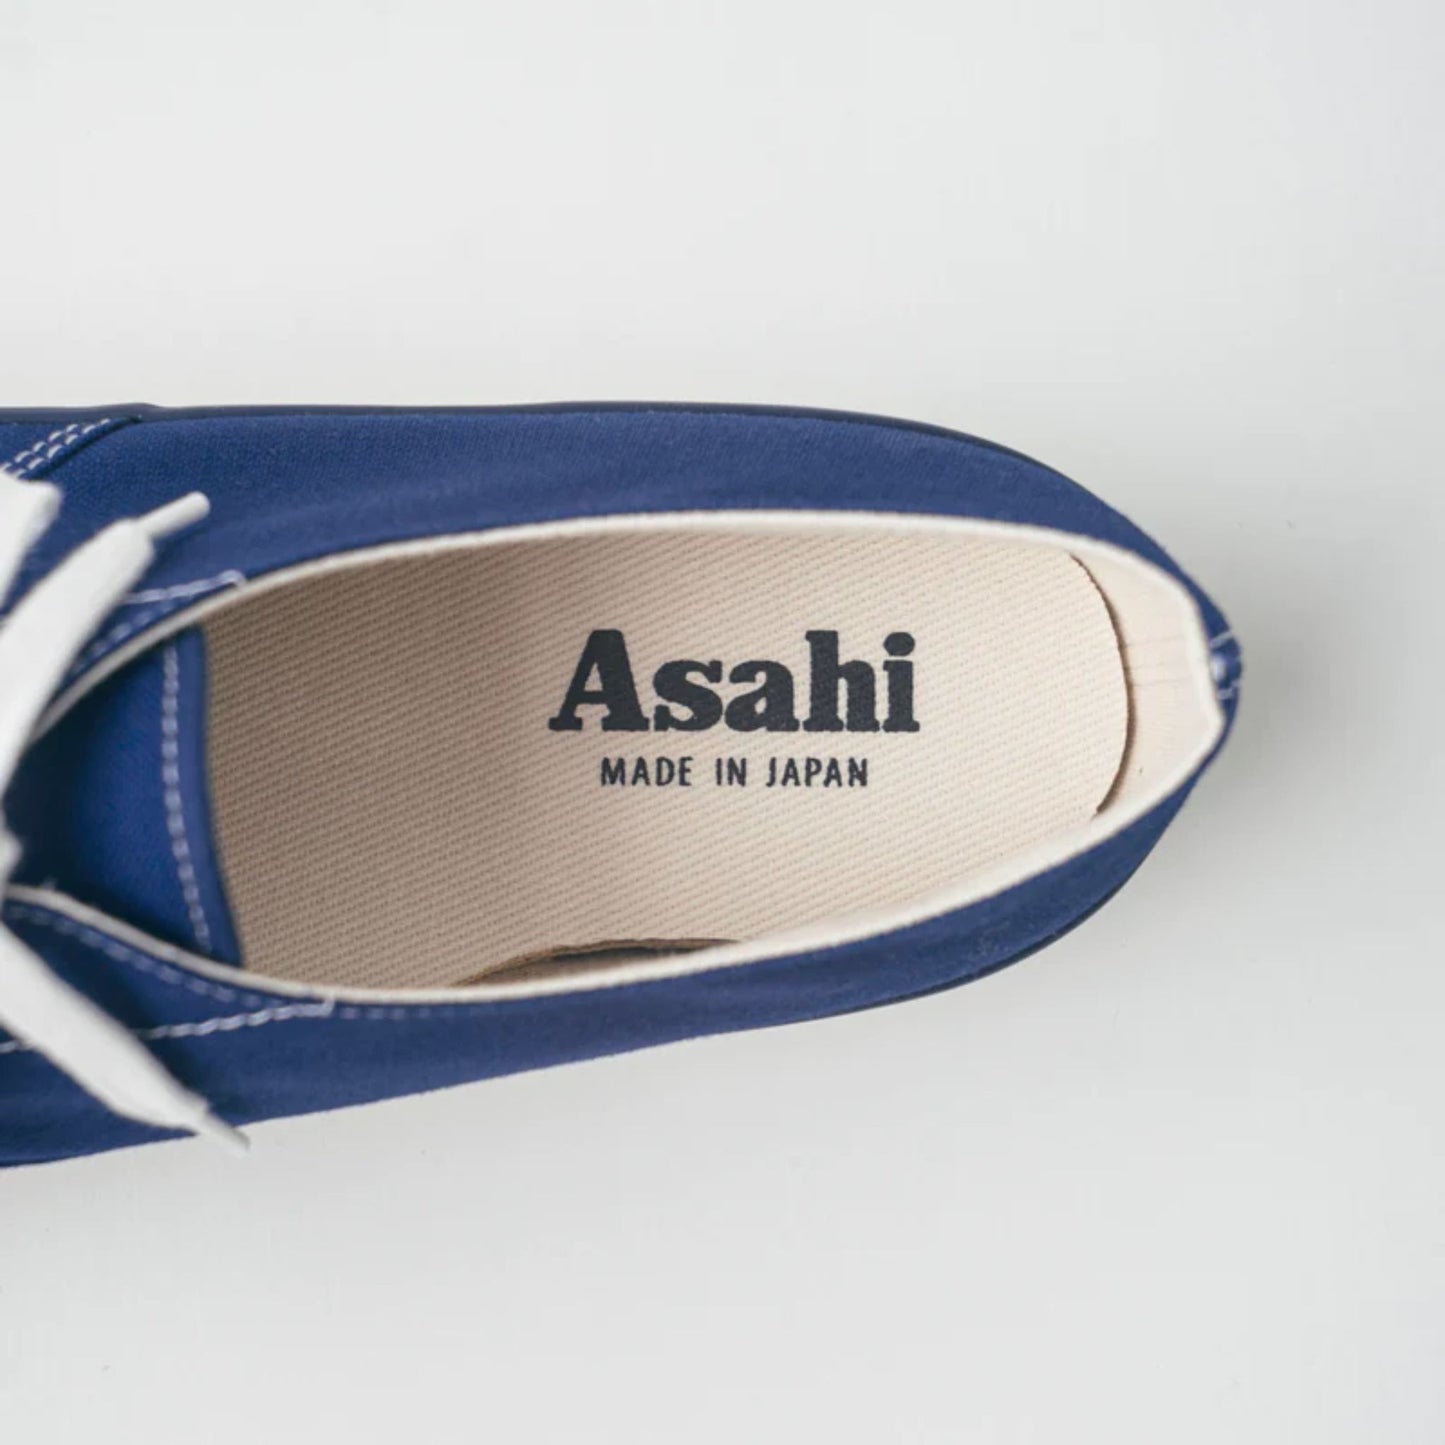 ASAHI - Deck Shoes Navy